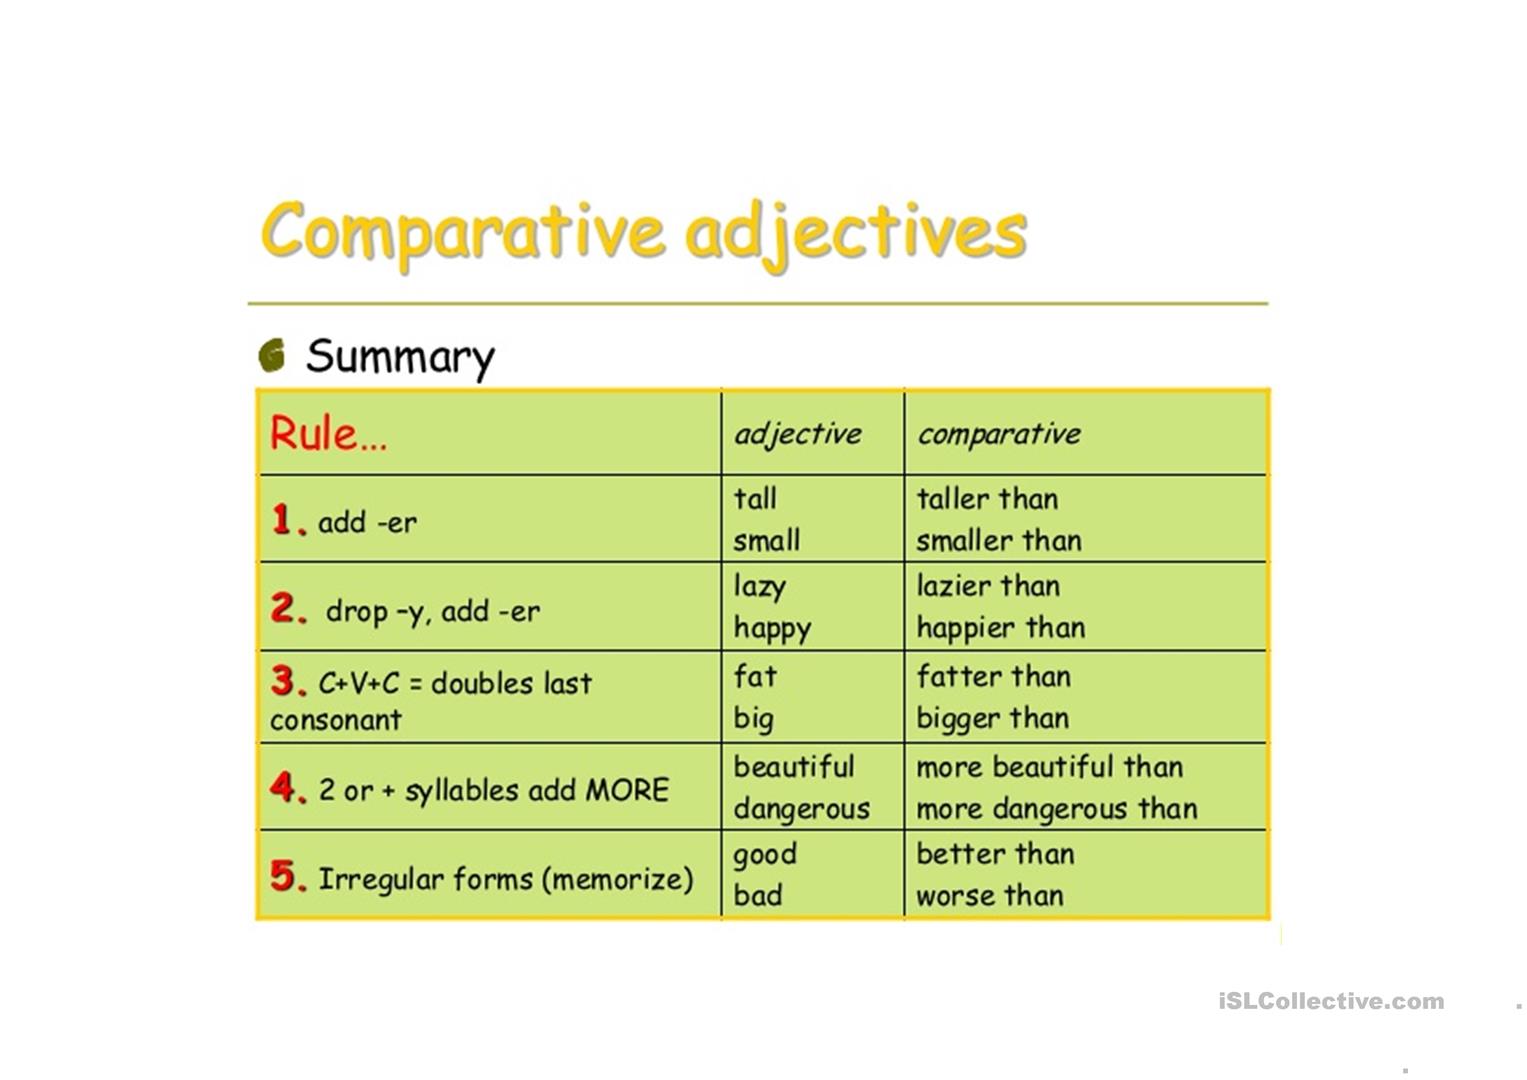 Adjective примеры. Superlative adjectives правило. Superlative таблица. Таблица Comparative and Superlative. Superlative правило.